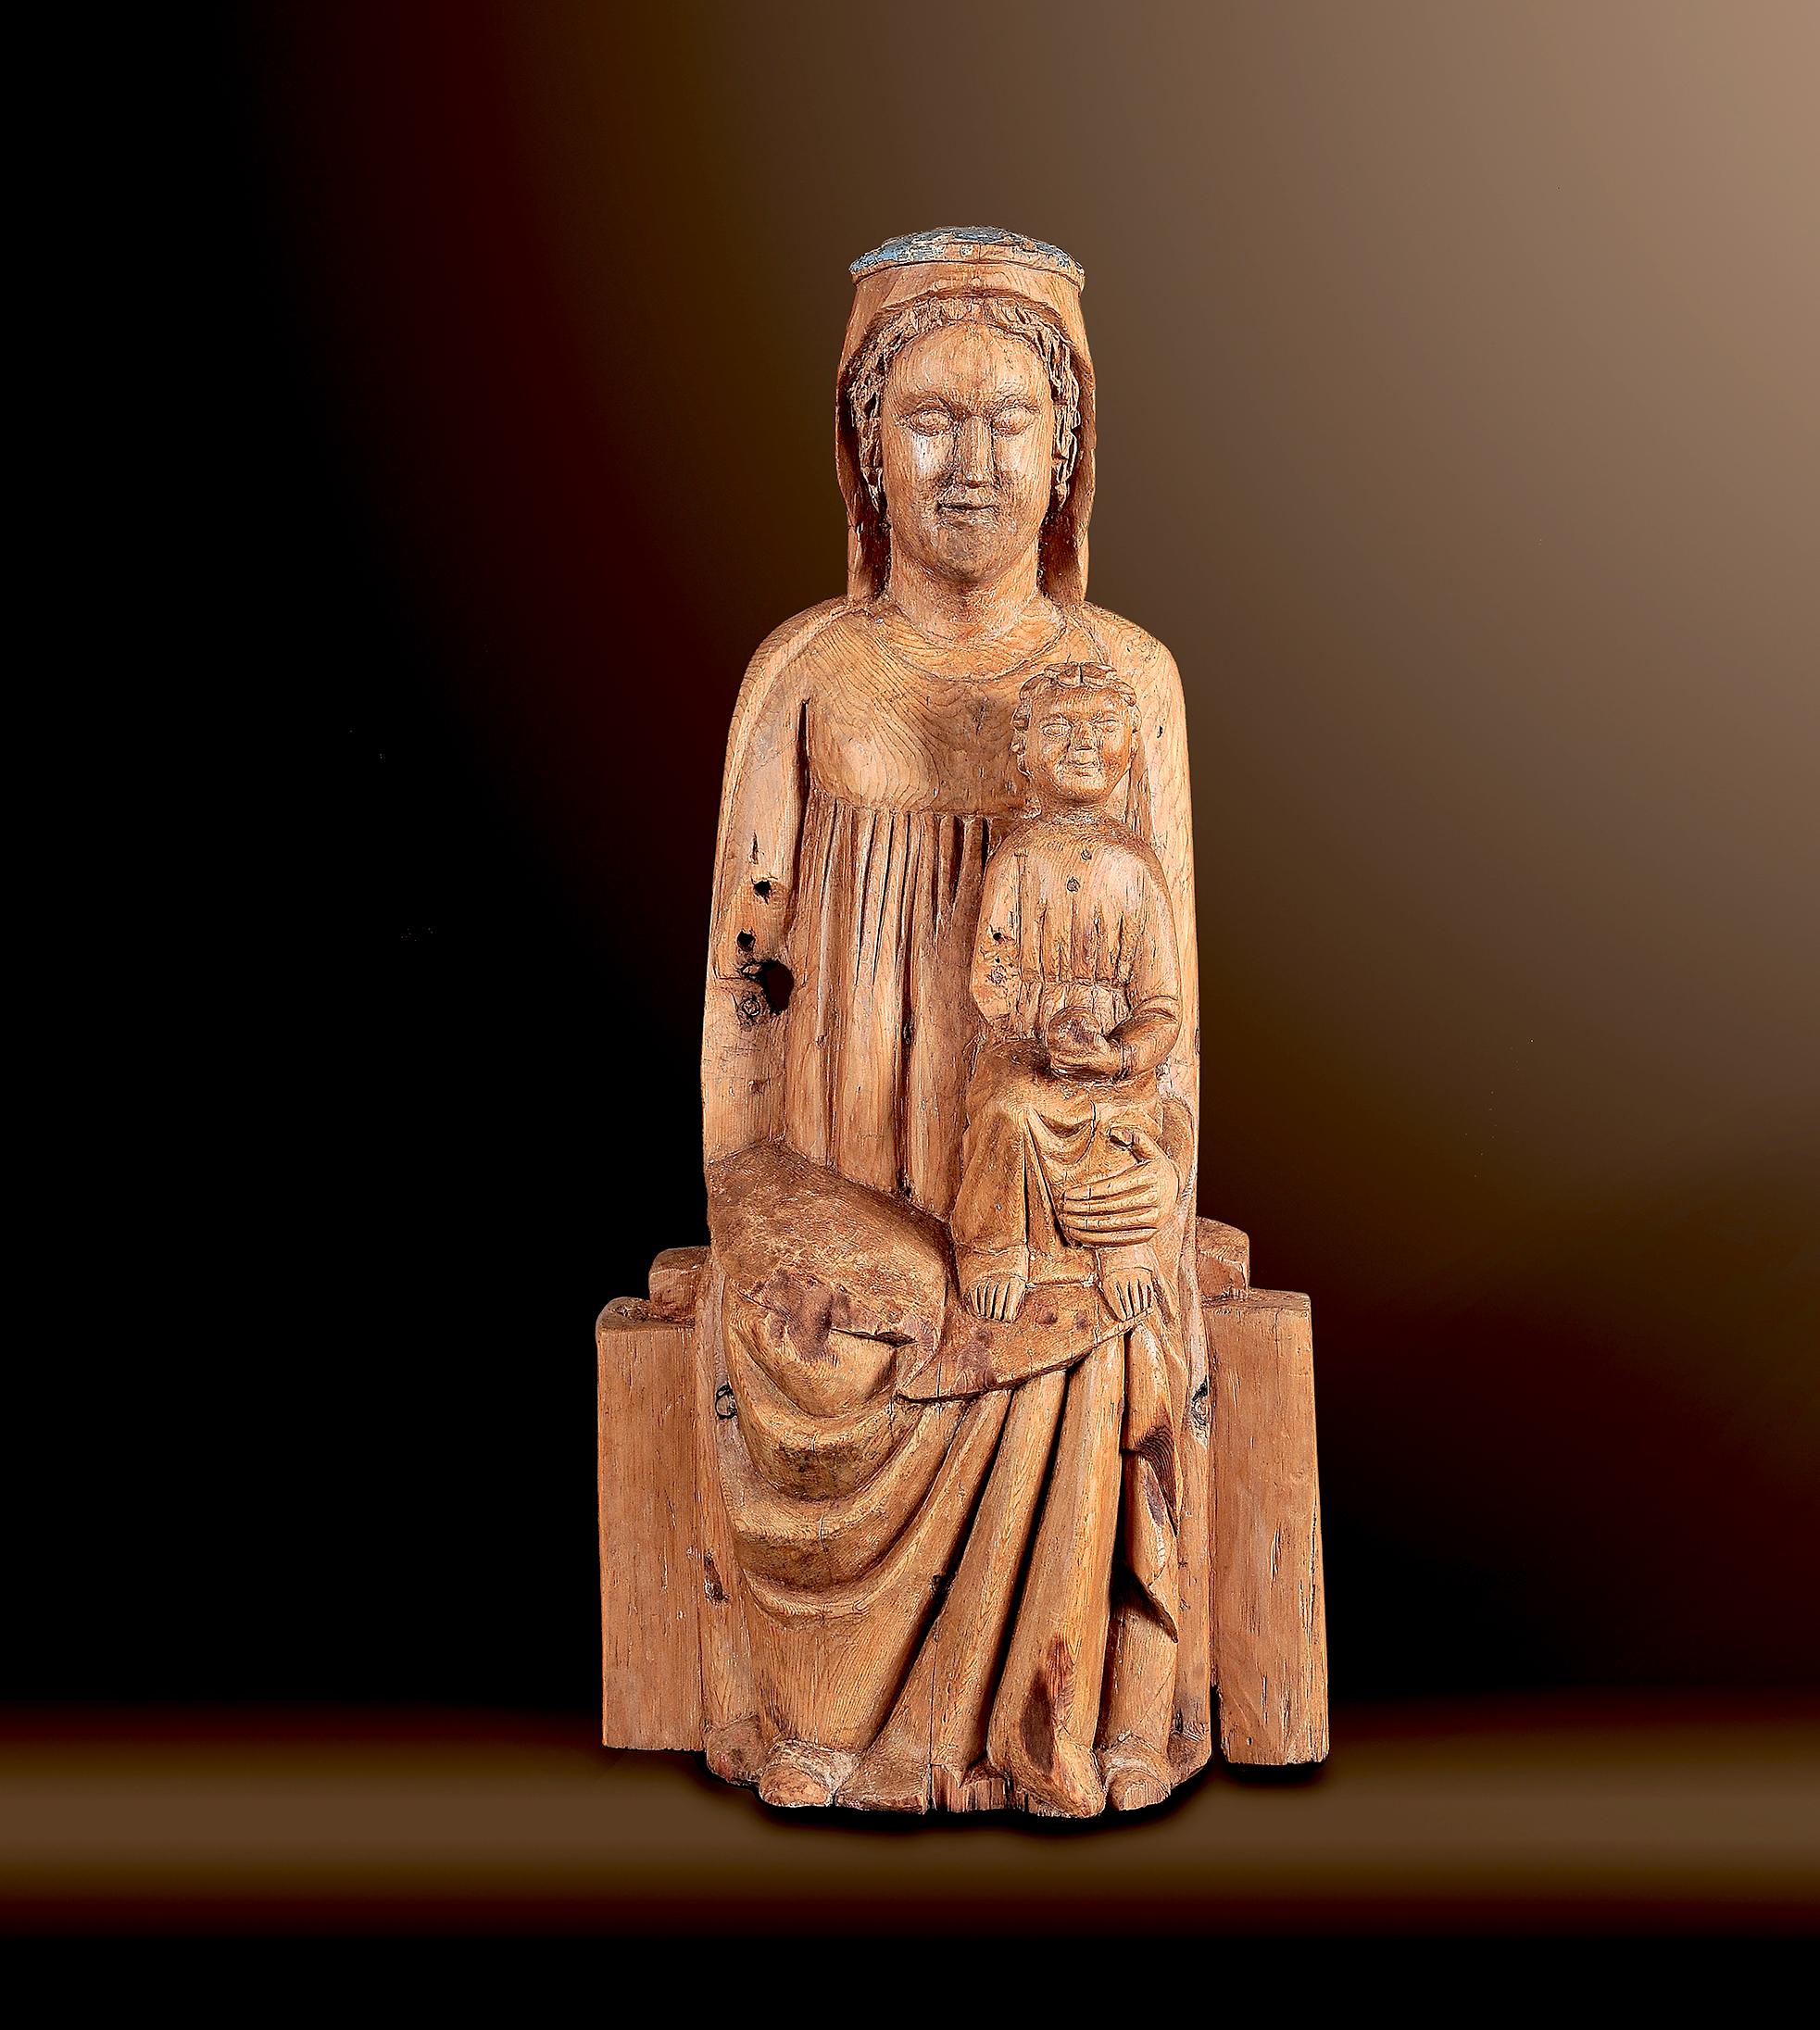 Unknown Figurative Sculpture - Late Romanesque Madonna "Sedes Sapientiae"